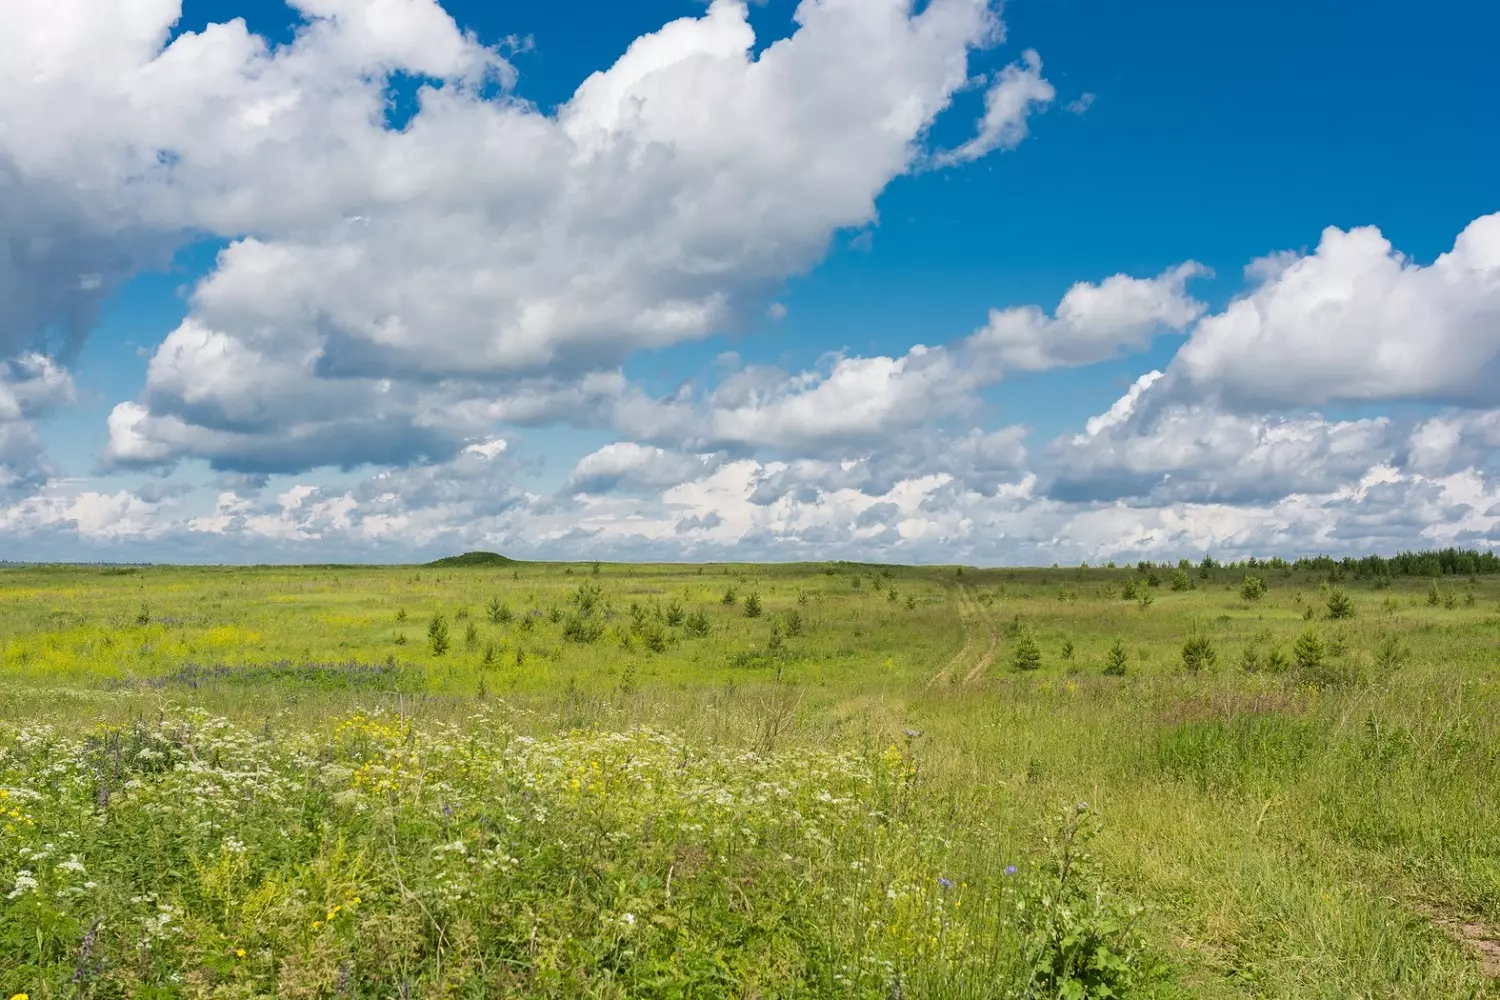 Russian prairie under blue skies, photo credit: pxhere